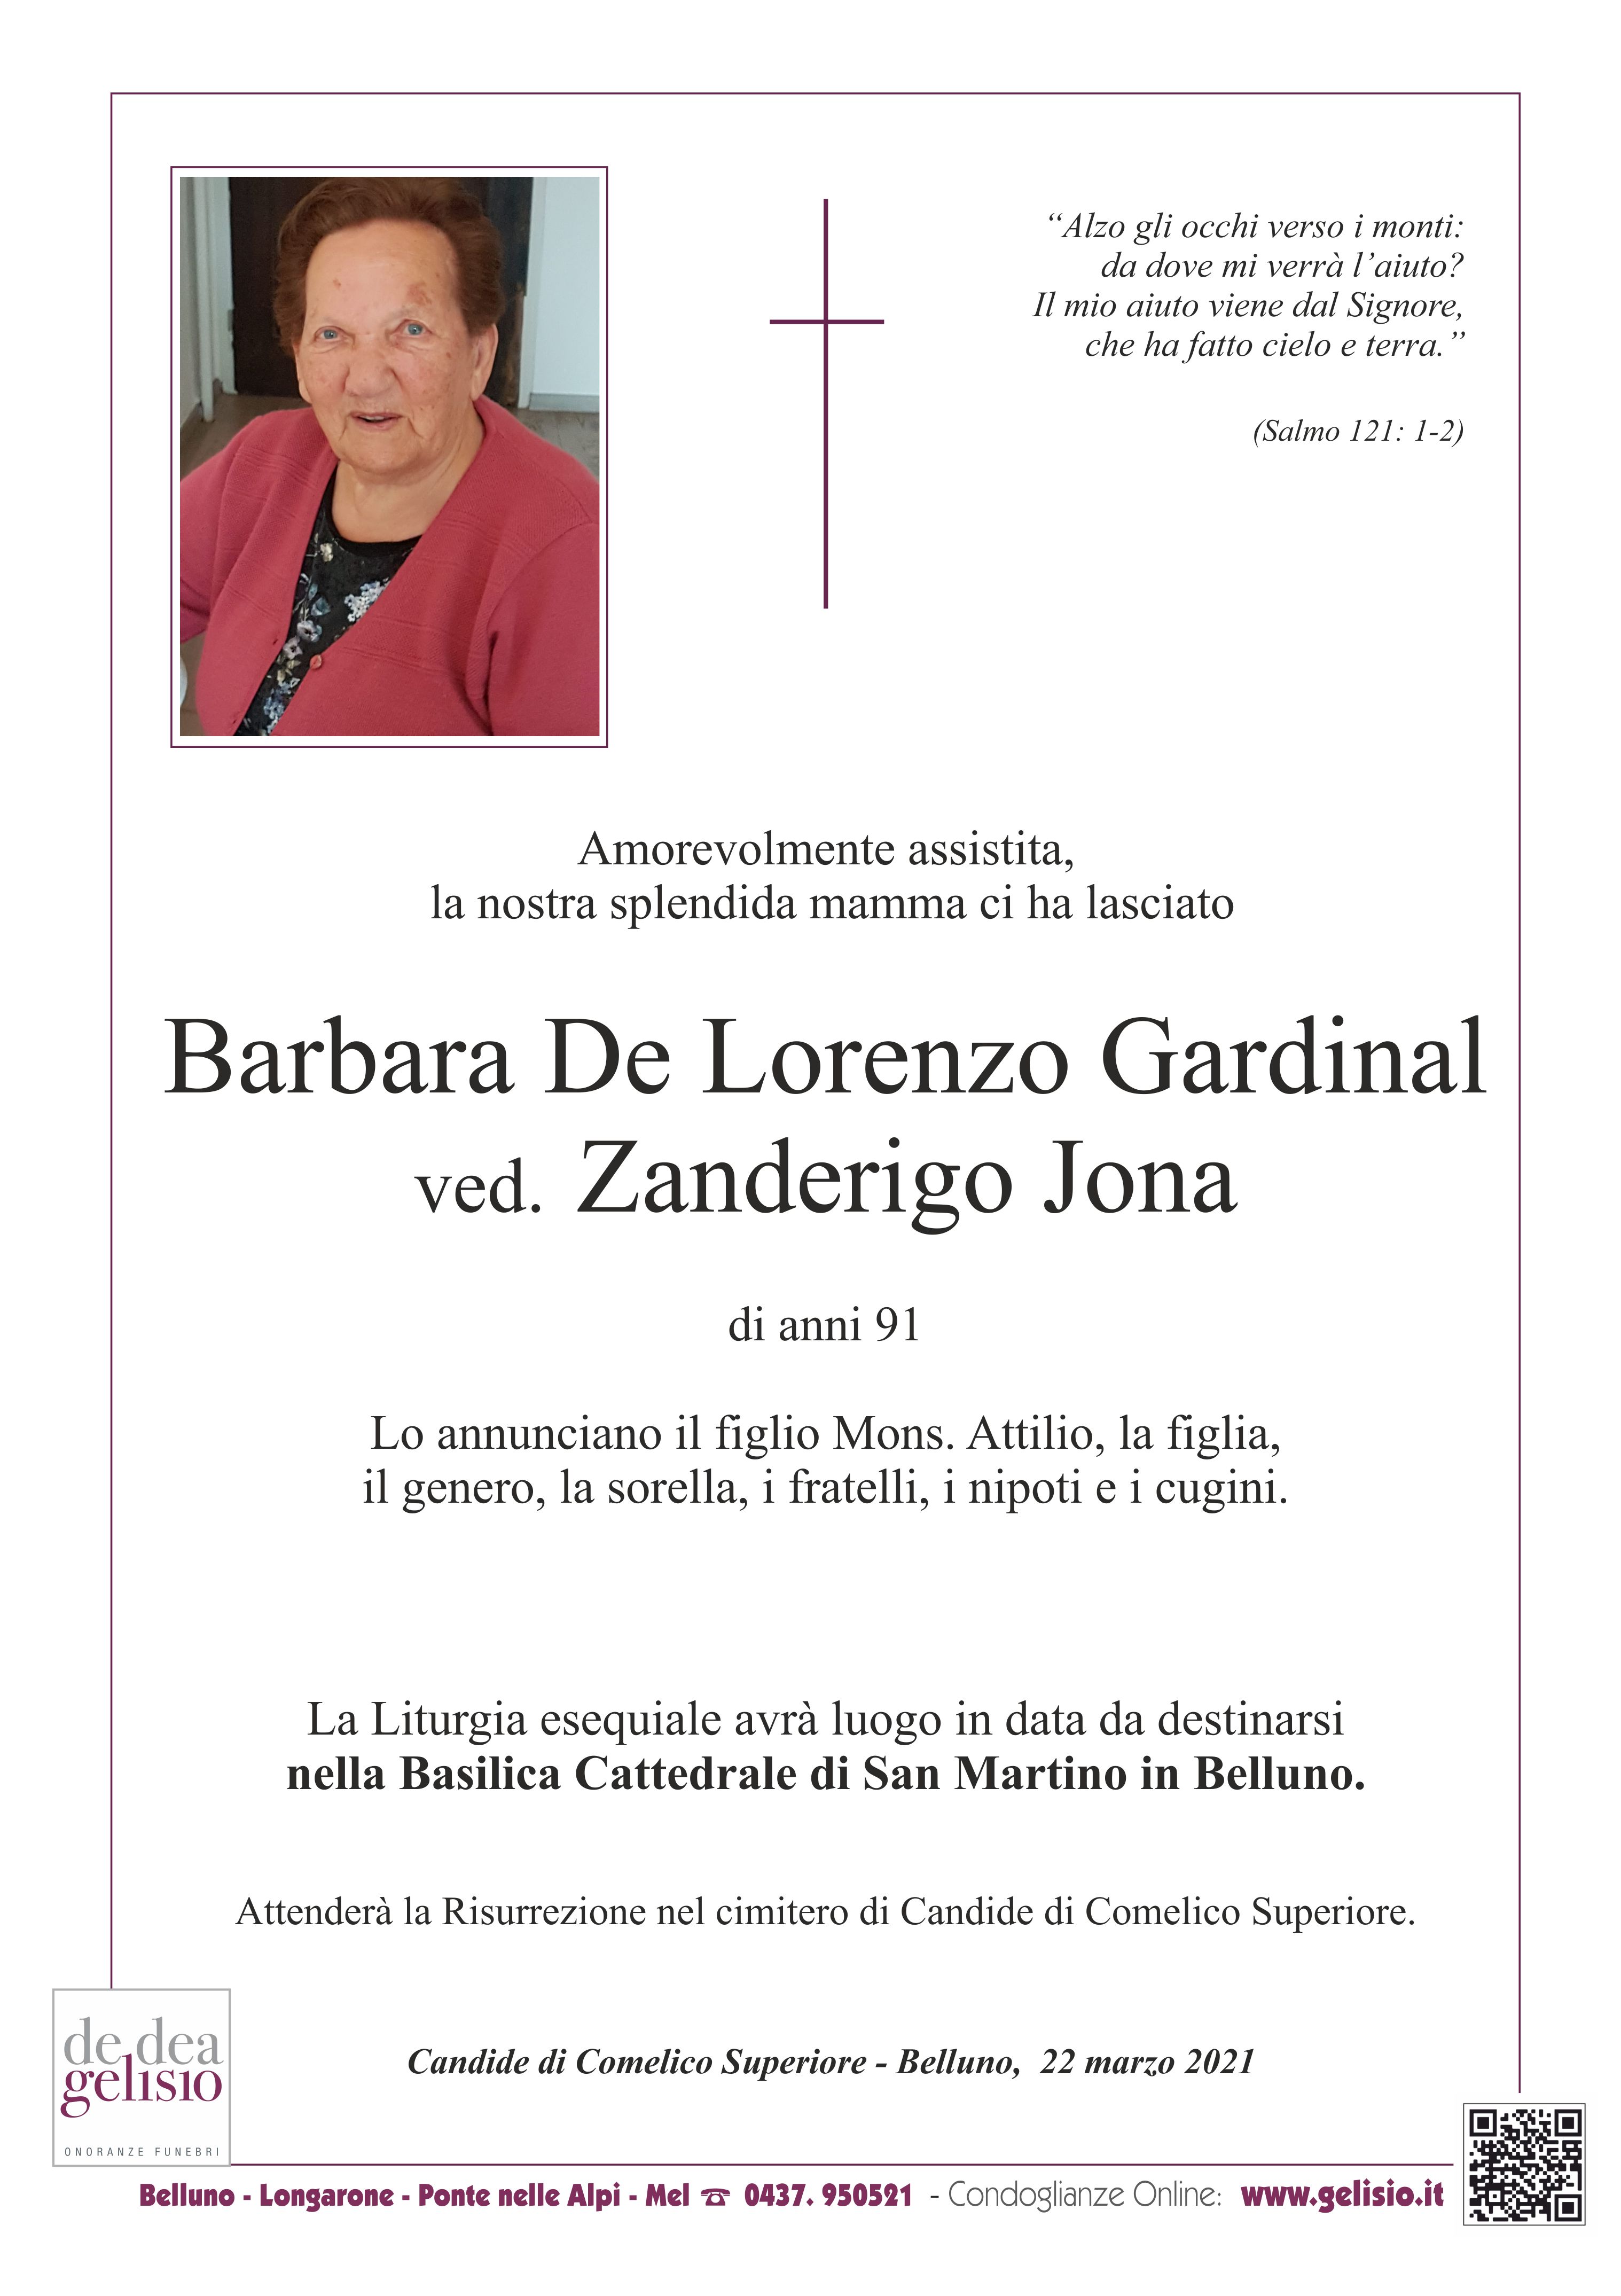 De Lorenzo Gardinal Barbara